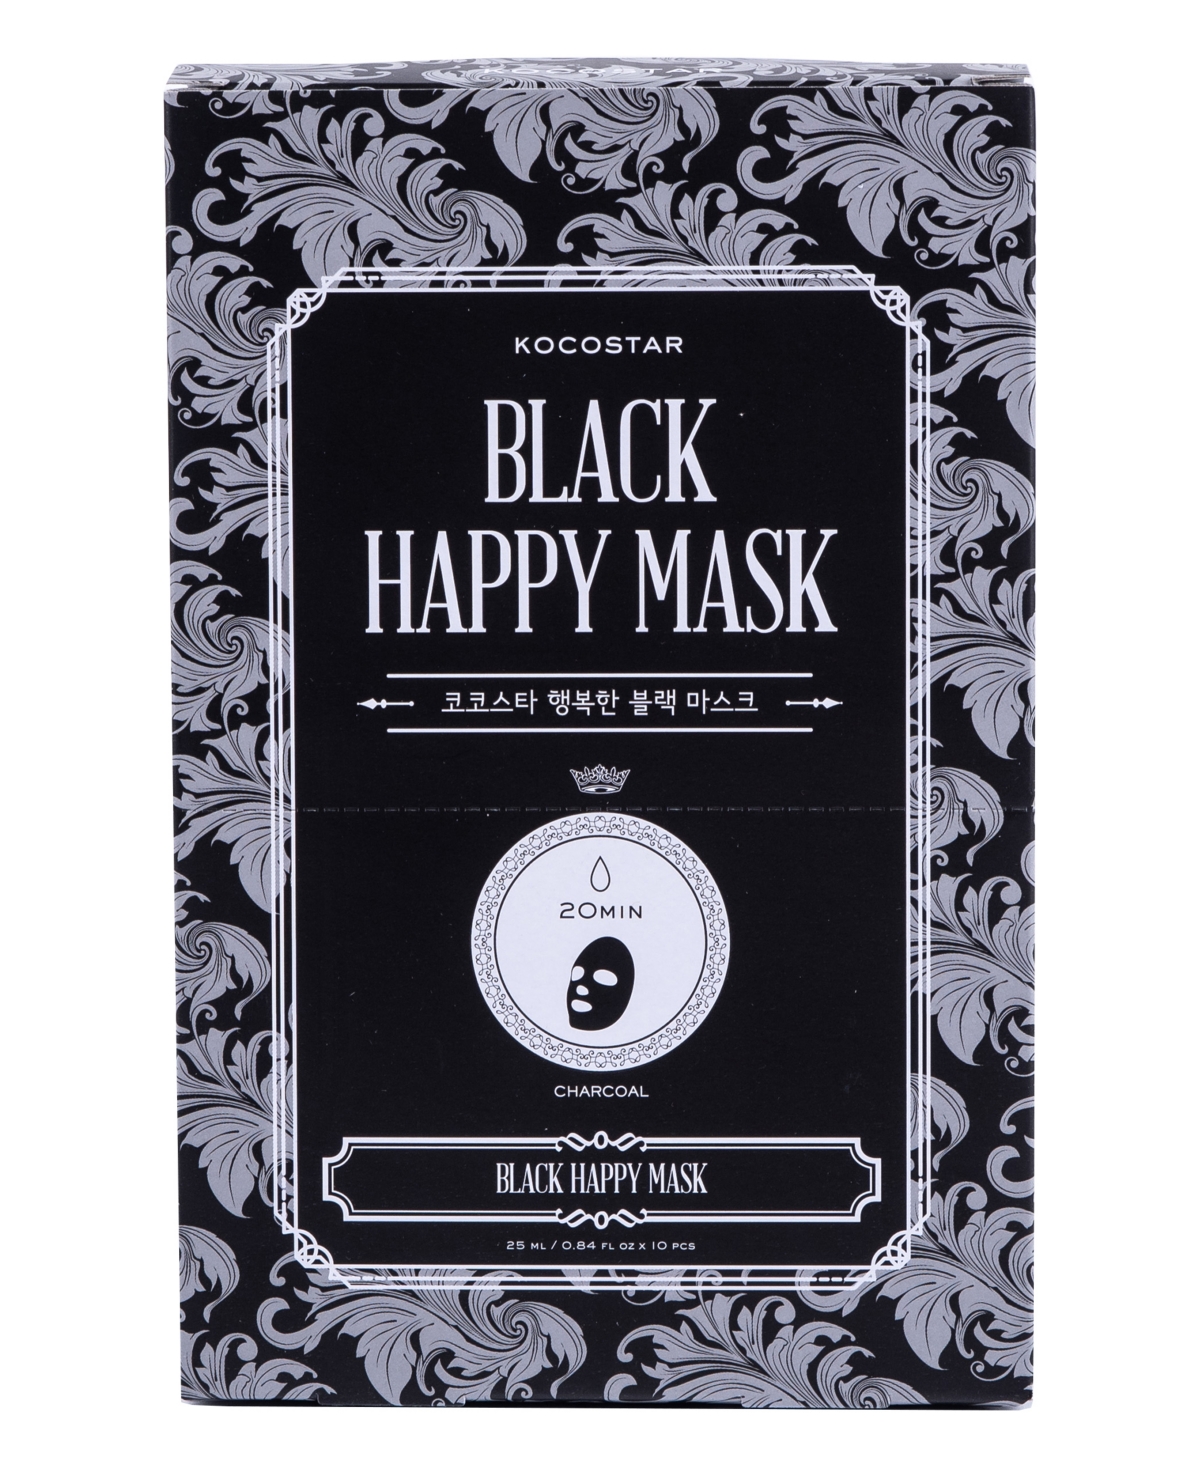 Kocostar Black Happy Mask, Pack of 10